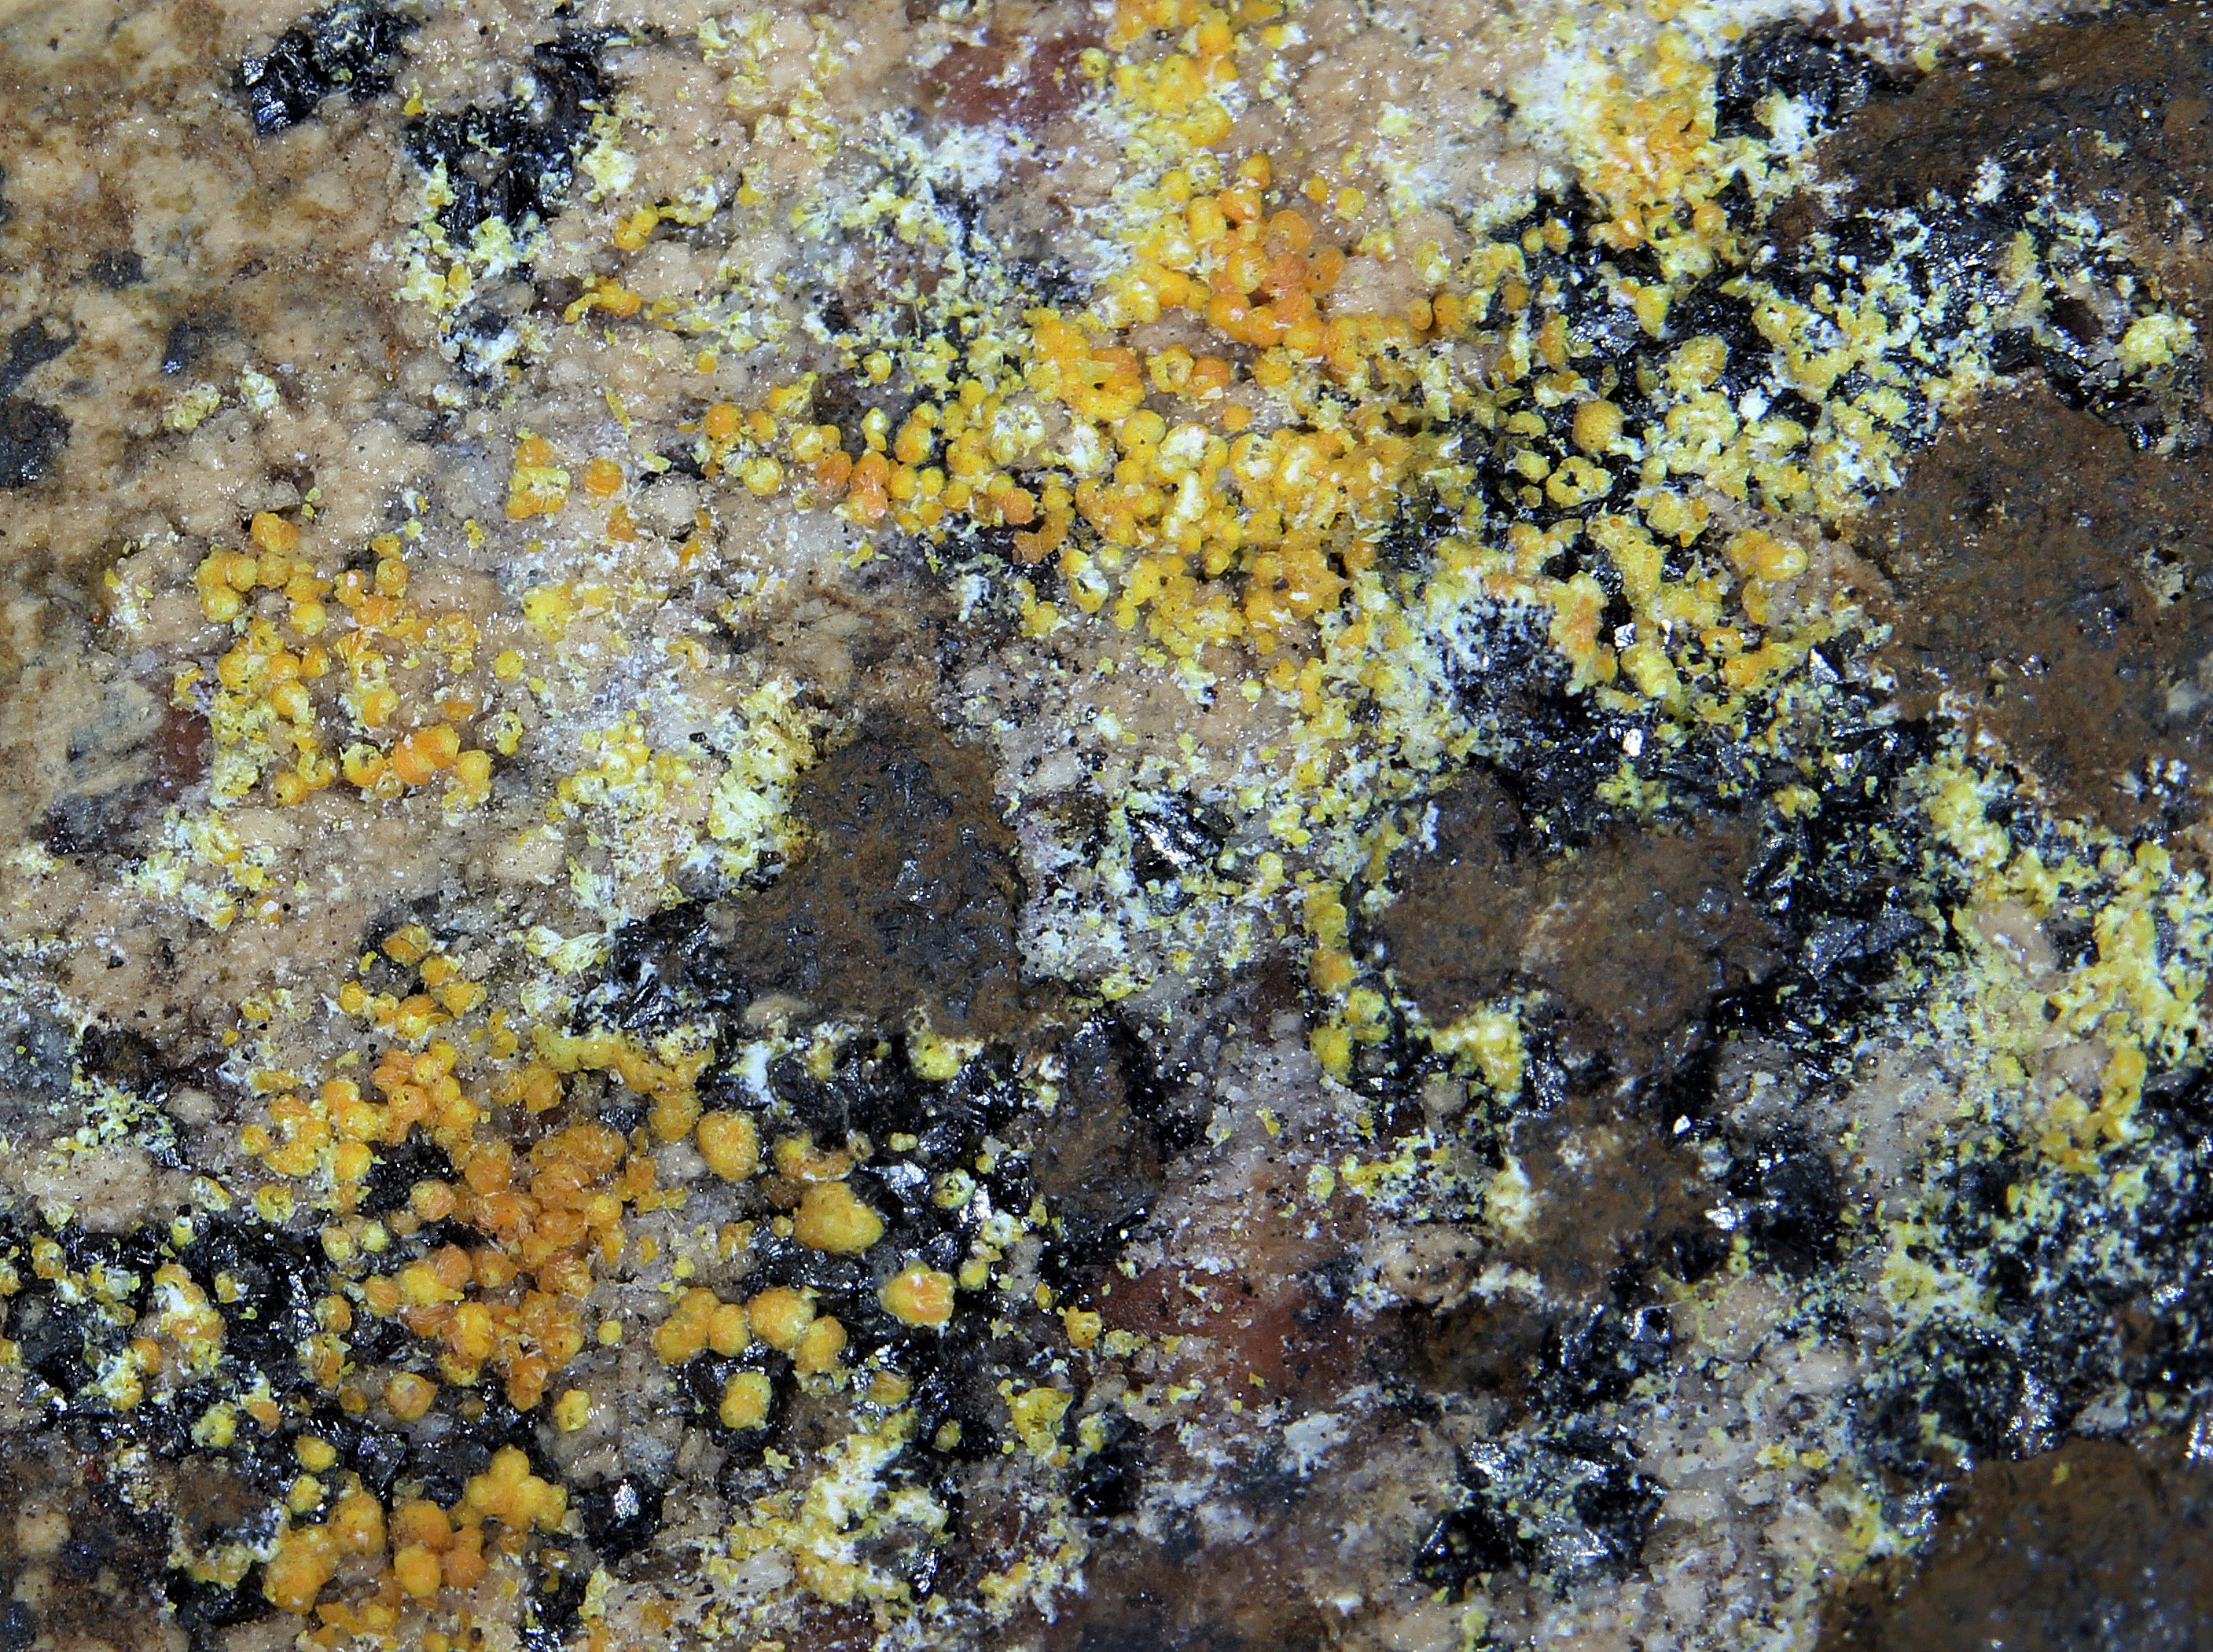 Secondary zincite crystals, hetaerolite crystals, hodgkinsonite, willemite, hydrozincite and sphalerite from the Sterling Hill Mine, NJ